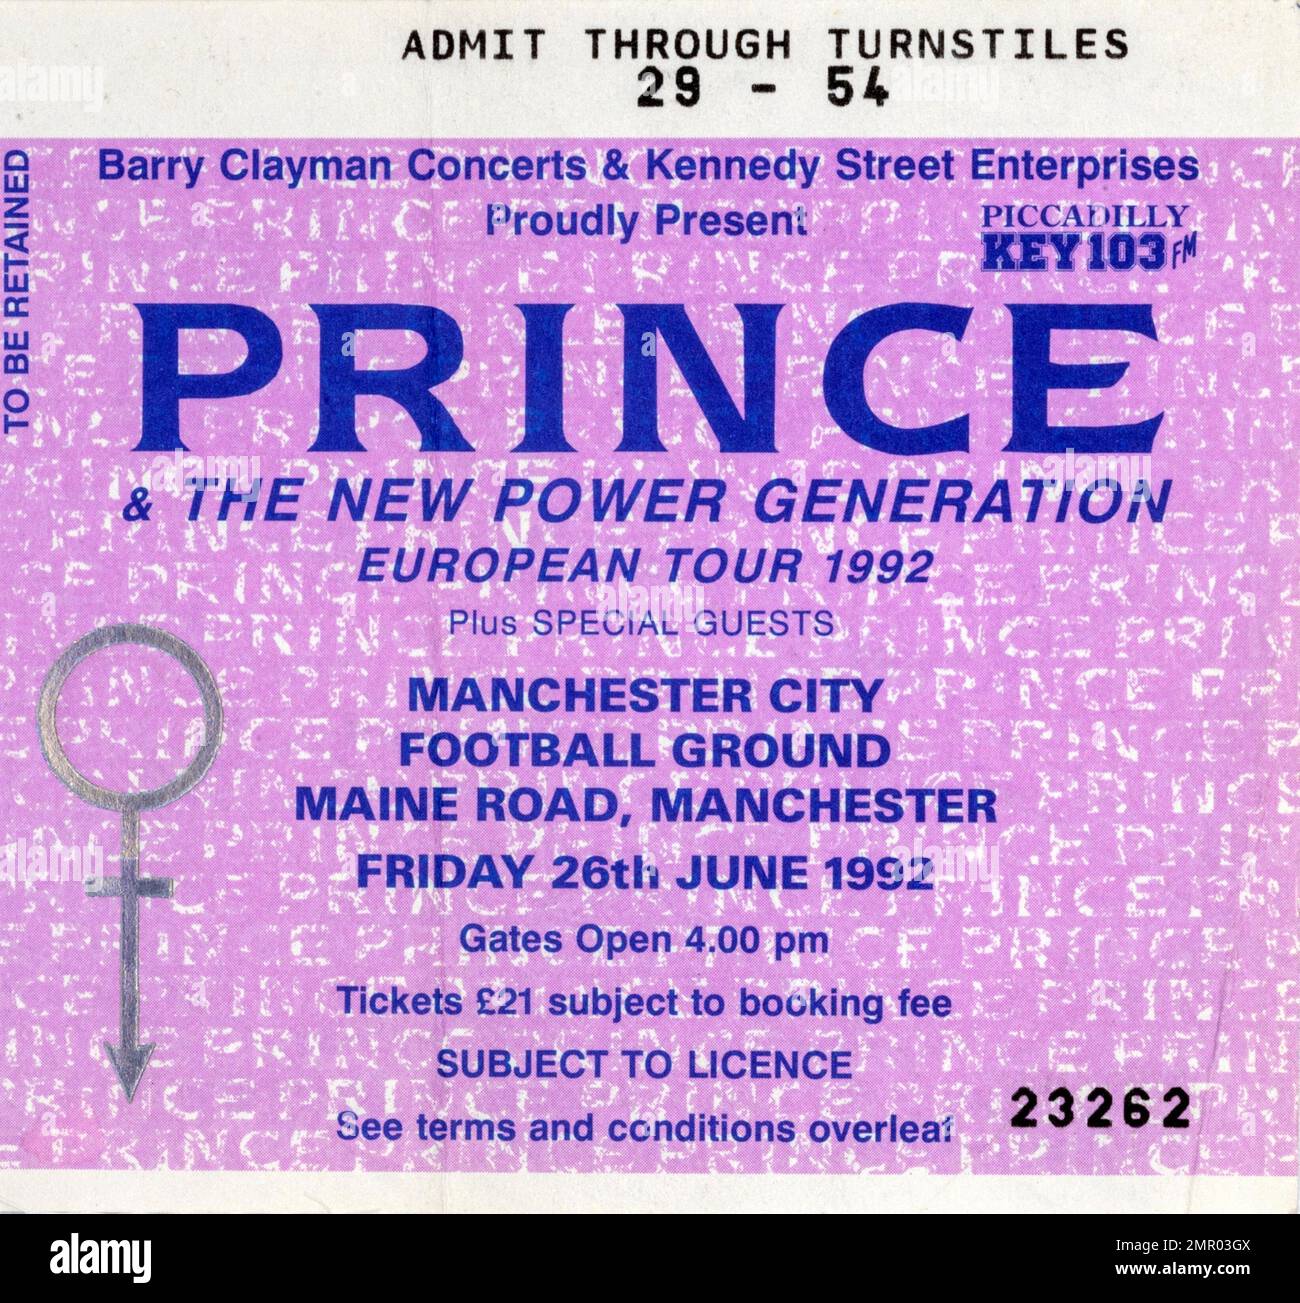 Prince & The New Power Generation, European Tour 1992, Manchester City, 26 June 1992, Concert Ticket Stubs, Music Concert Memorabilia , Stock Photo